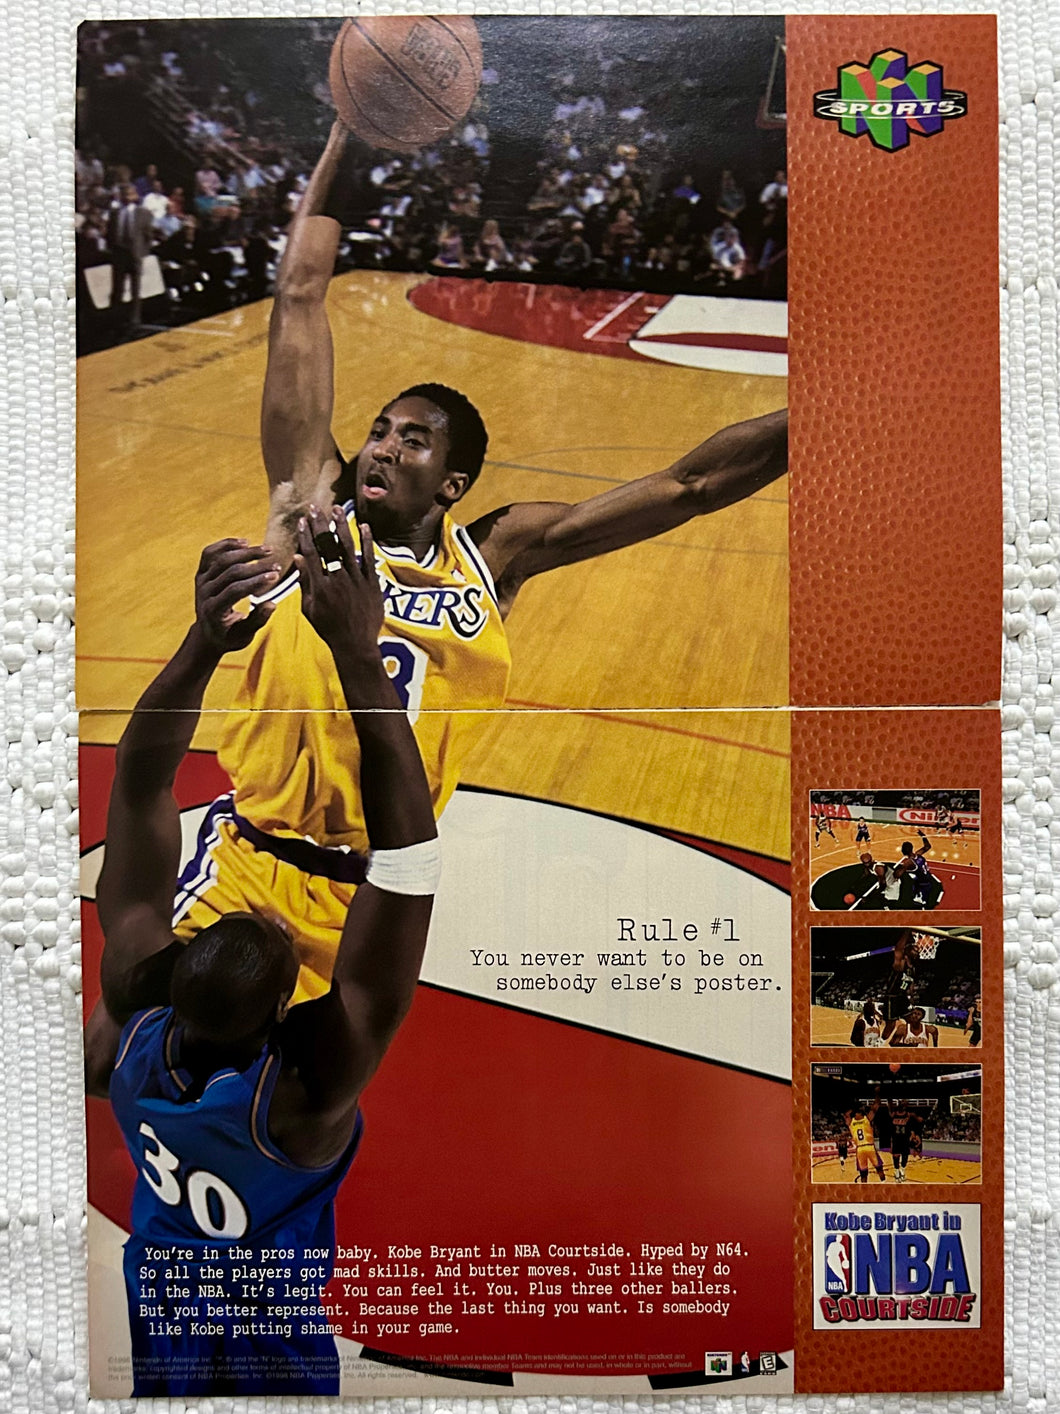 Kobe Bryant in NBA Courtside - N64 - Original Vintage Advertisement - Print Ads - Laminated A3 Poster